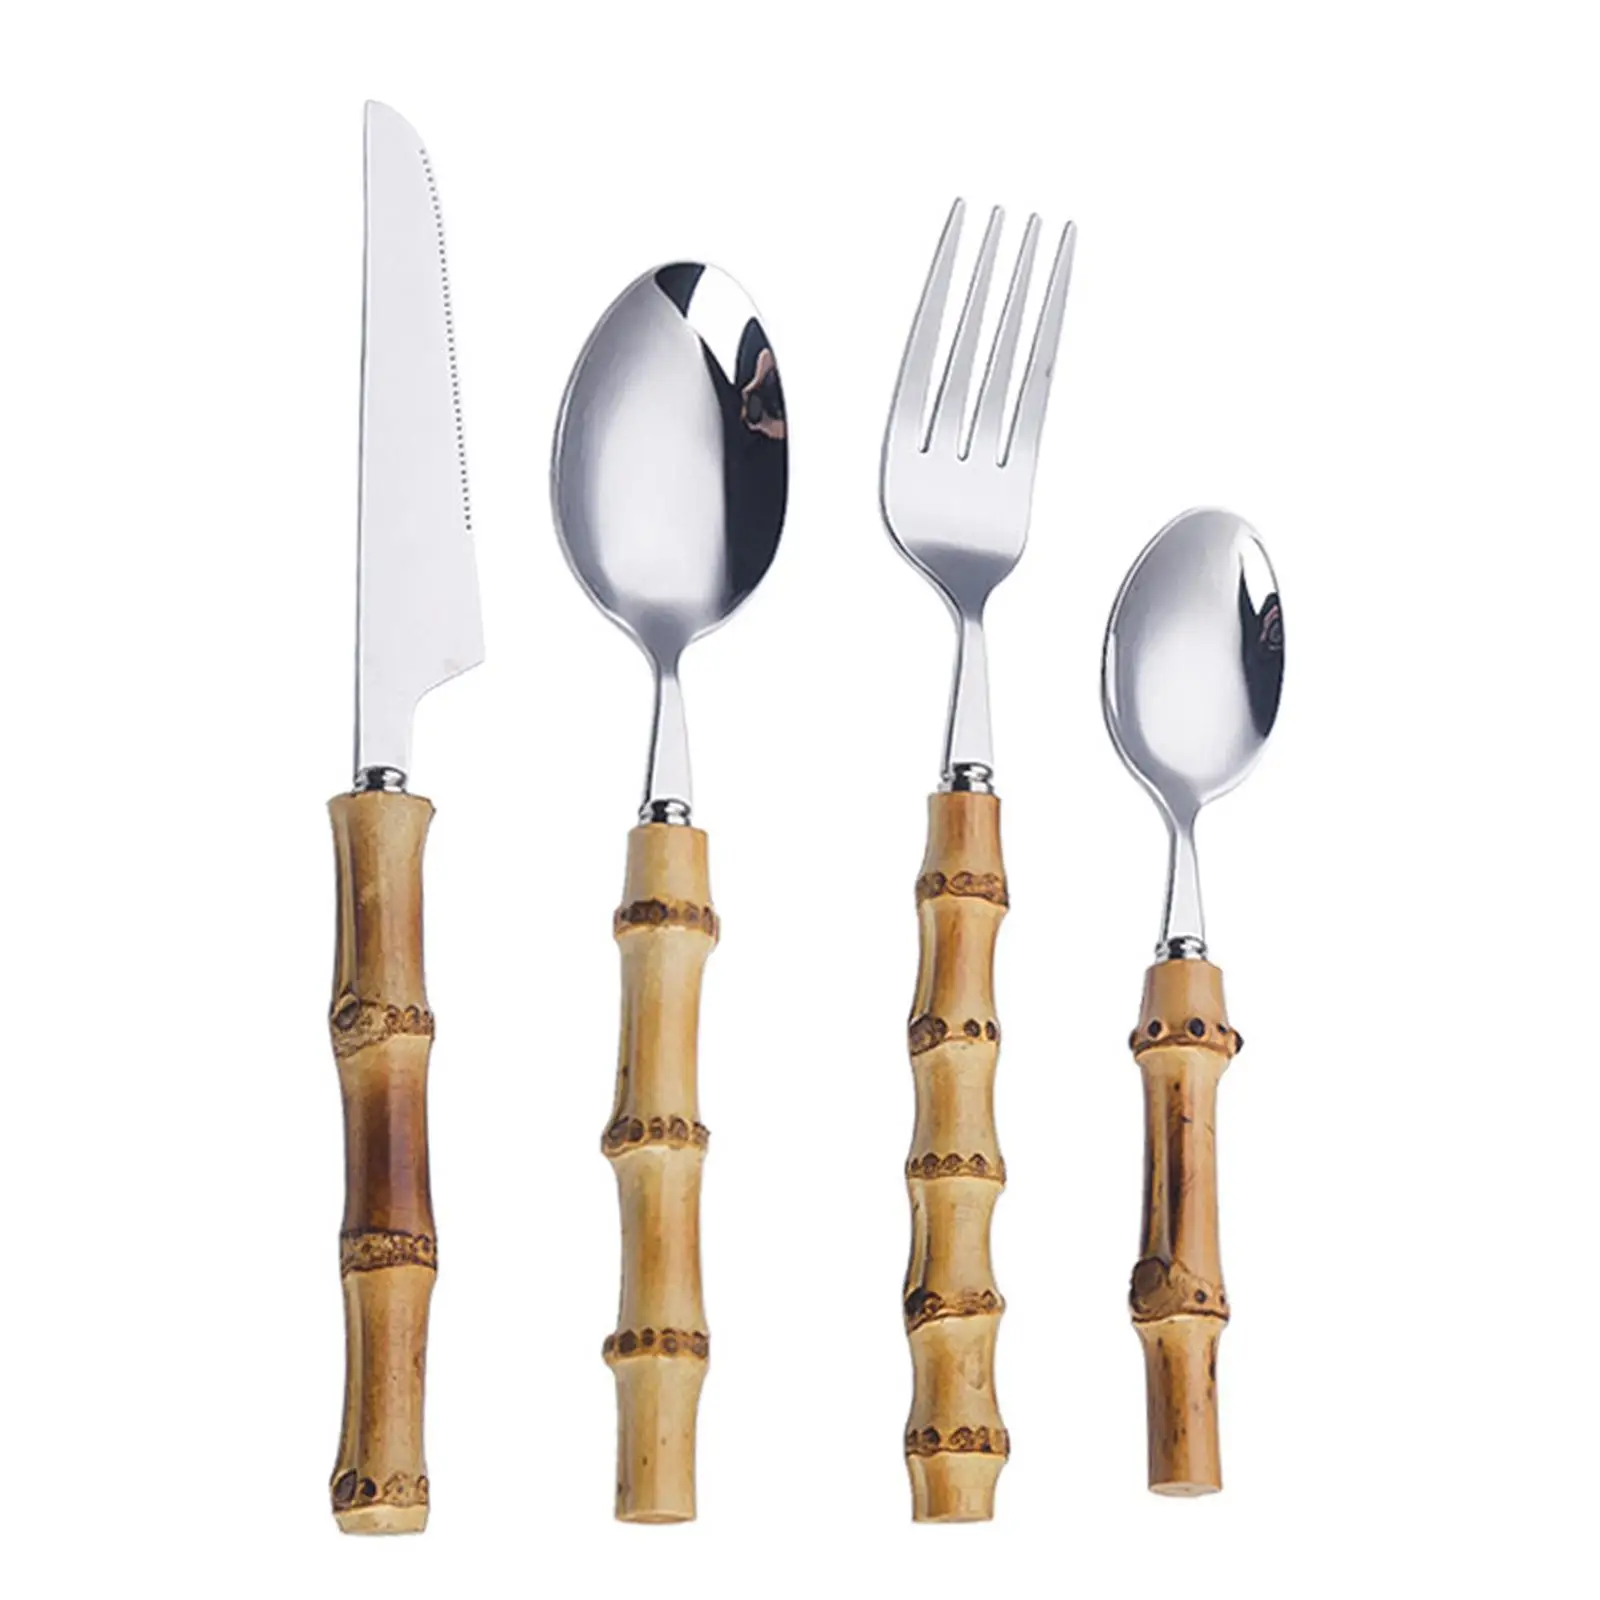 Travel Steak and Forks Tableware Forks Spoons Tableware Service Eating Dinnerware for Hiking Camping